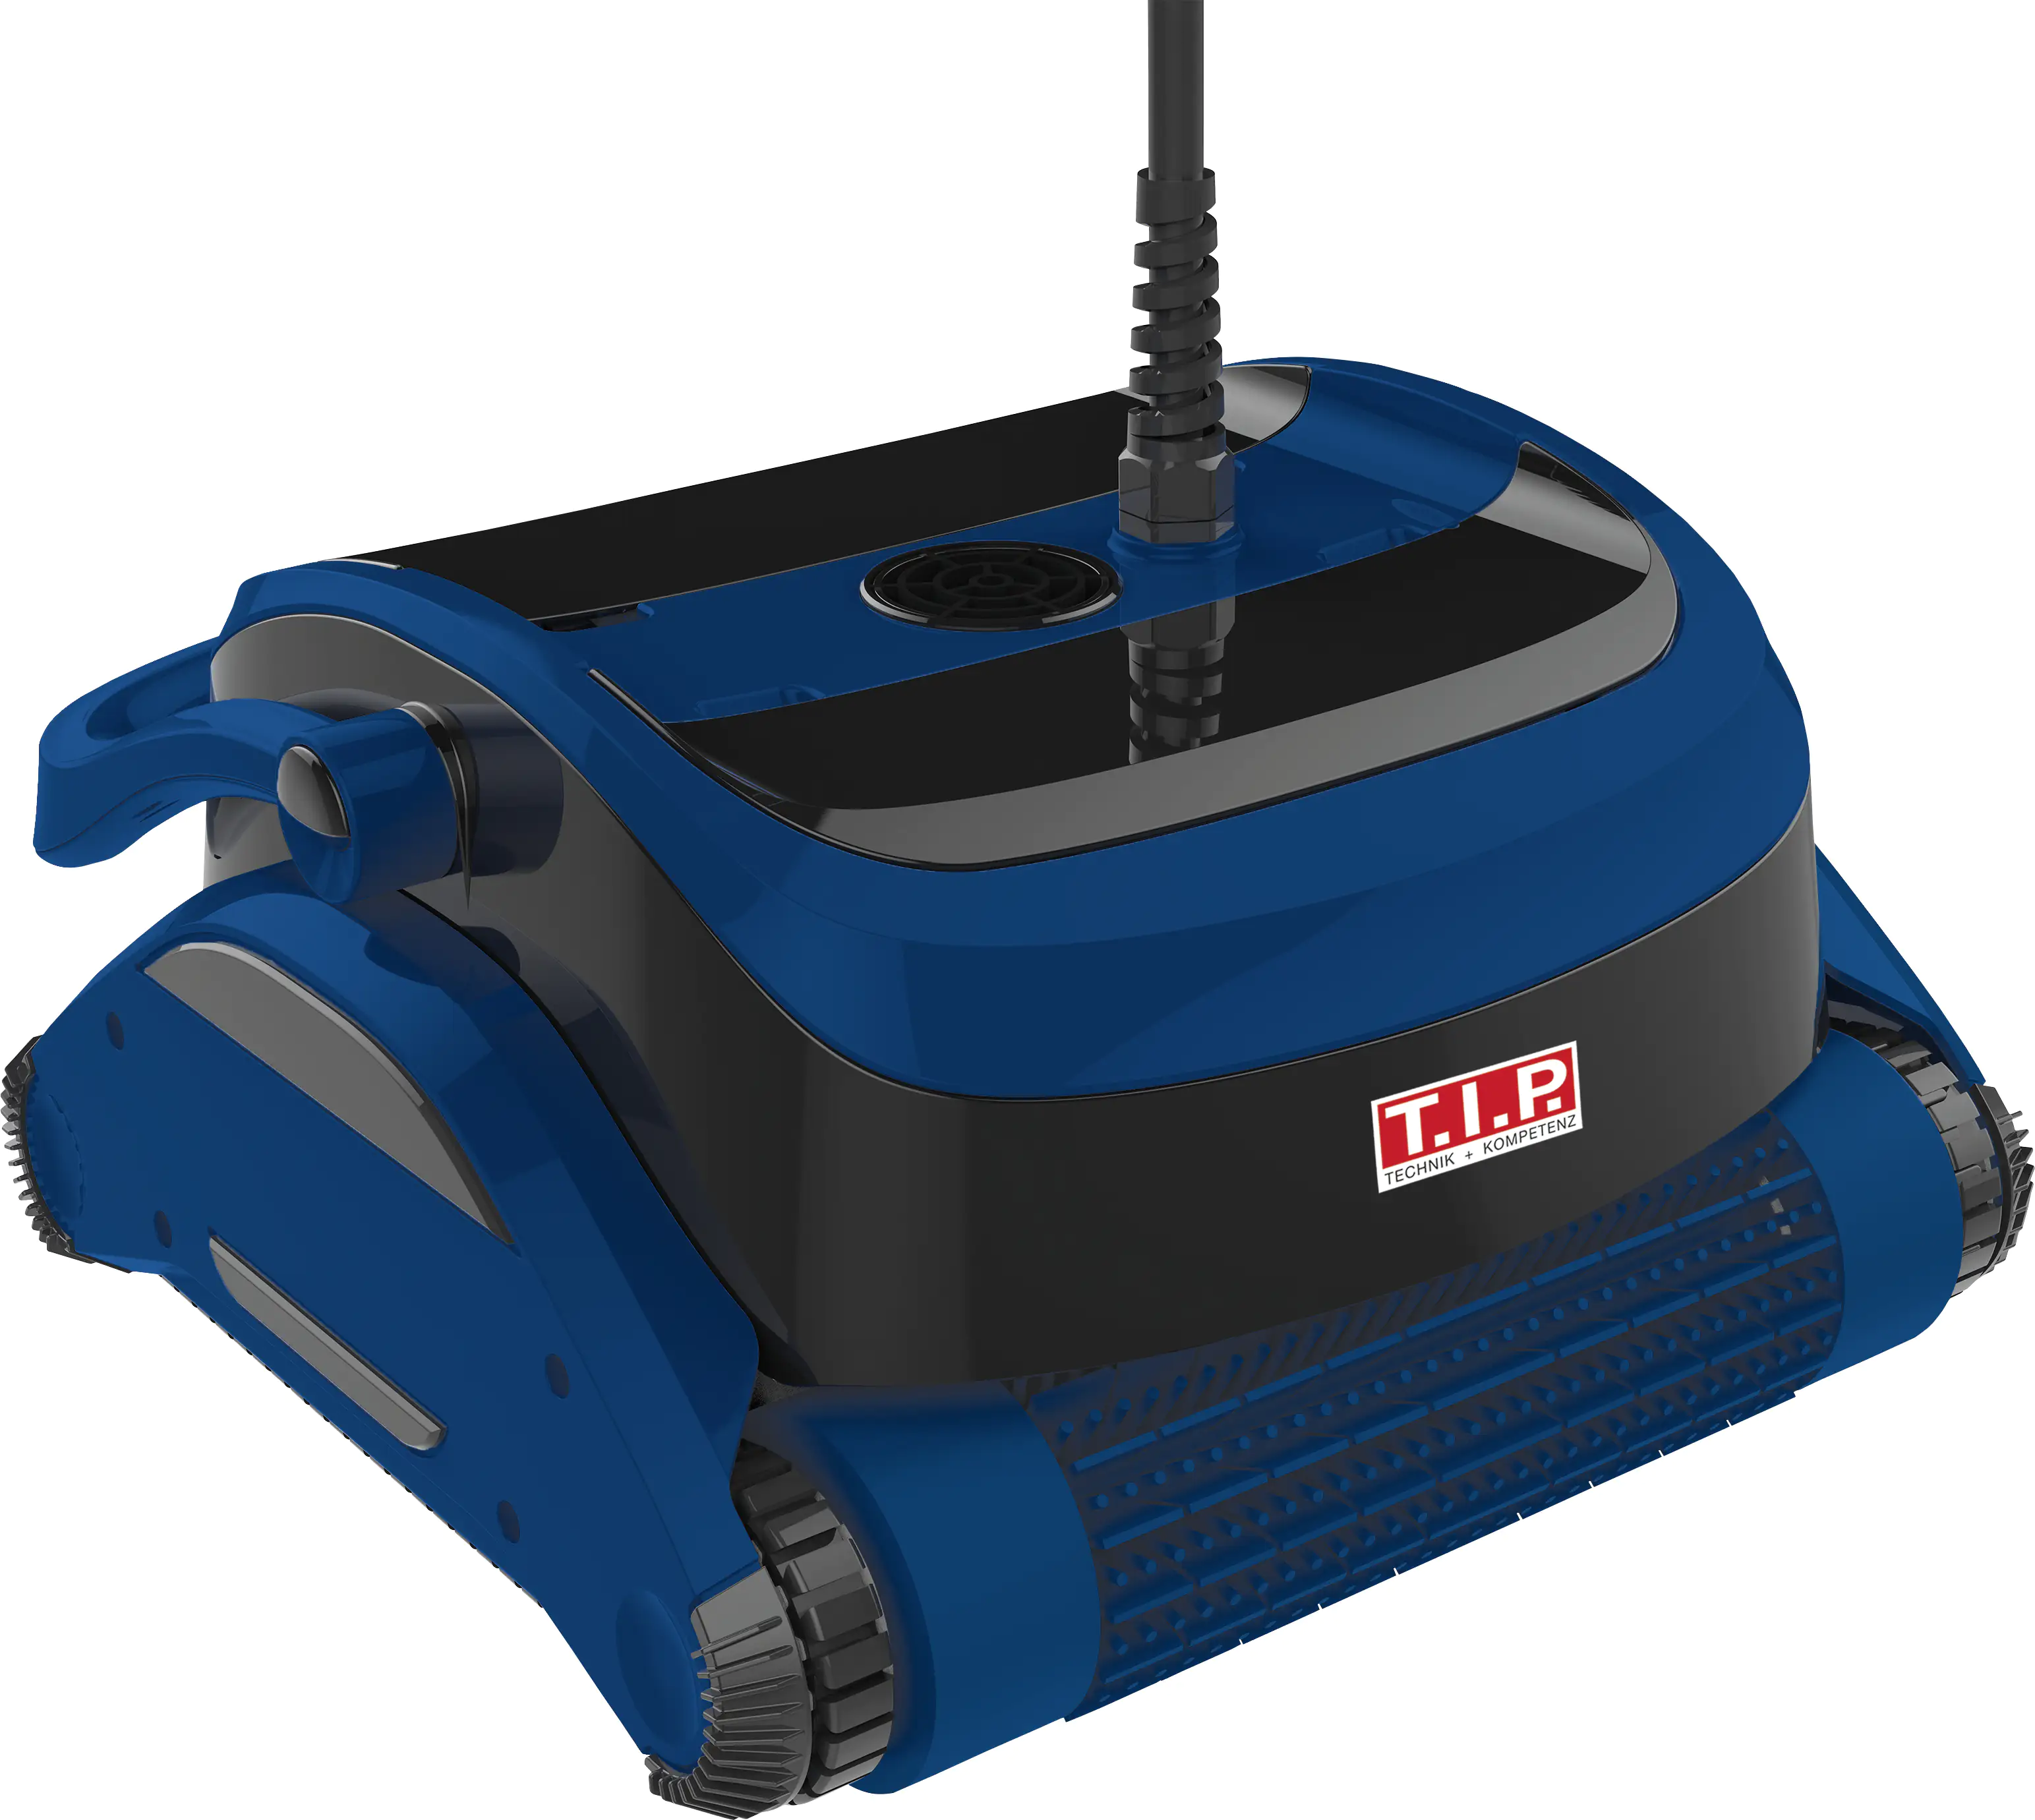 T.I.P. Poolroboter schwarz/blau 18000 Baumarkt Sweeper Globus 3D | kaufen